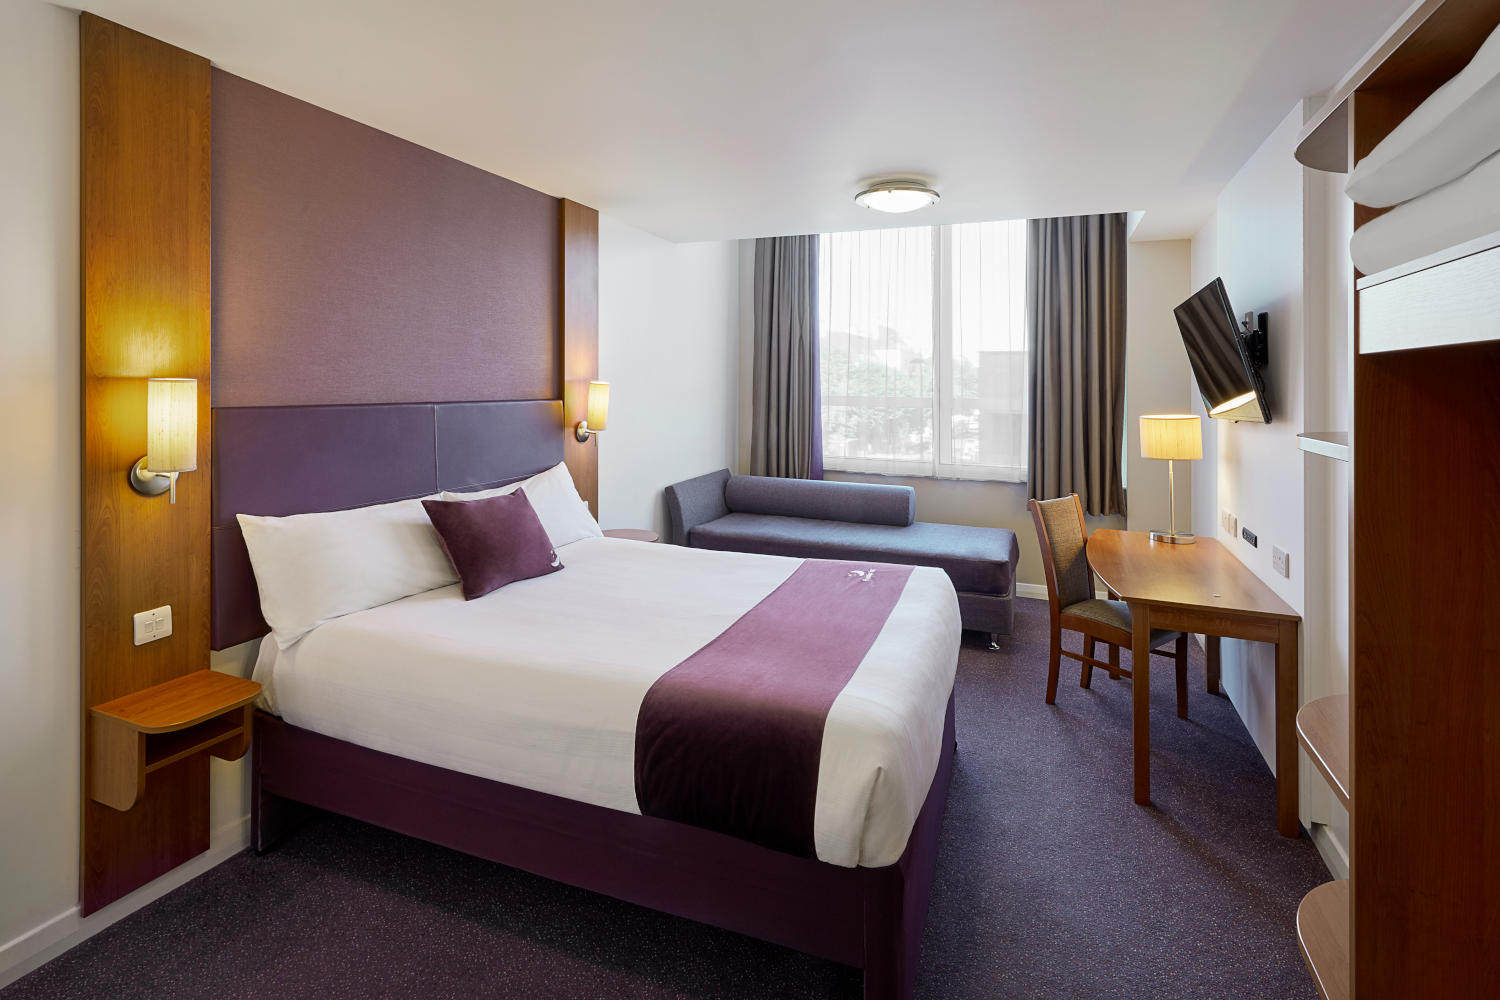 Premier Inn bedroom Premier Inn Bradford North (Bingley) hotel Keighley 03337 773937